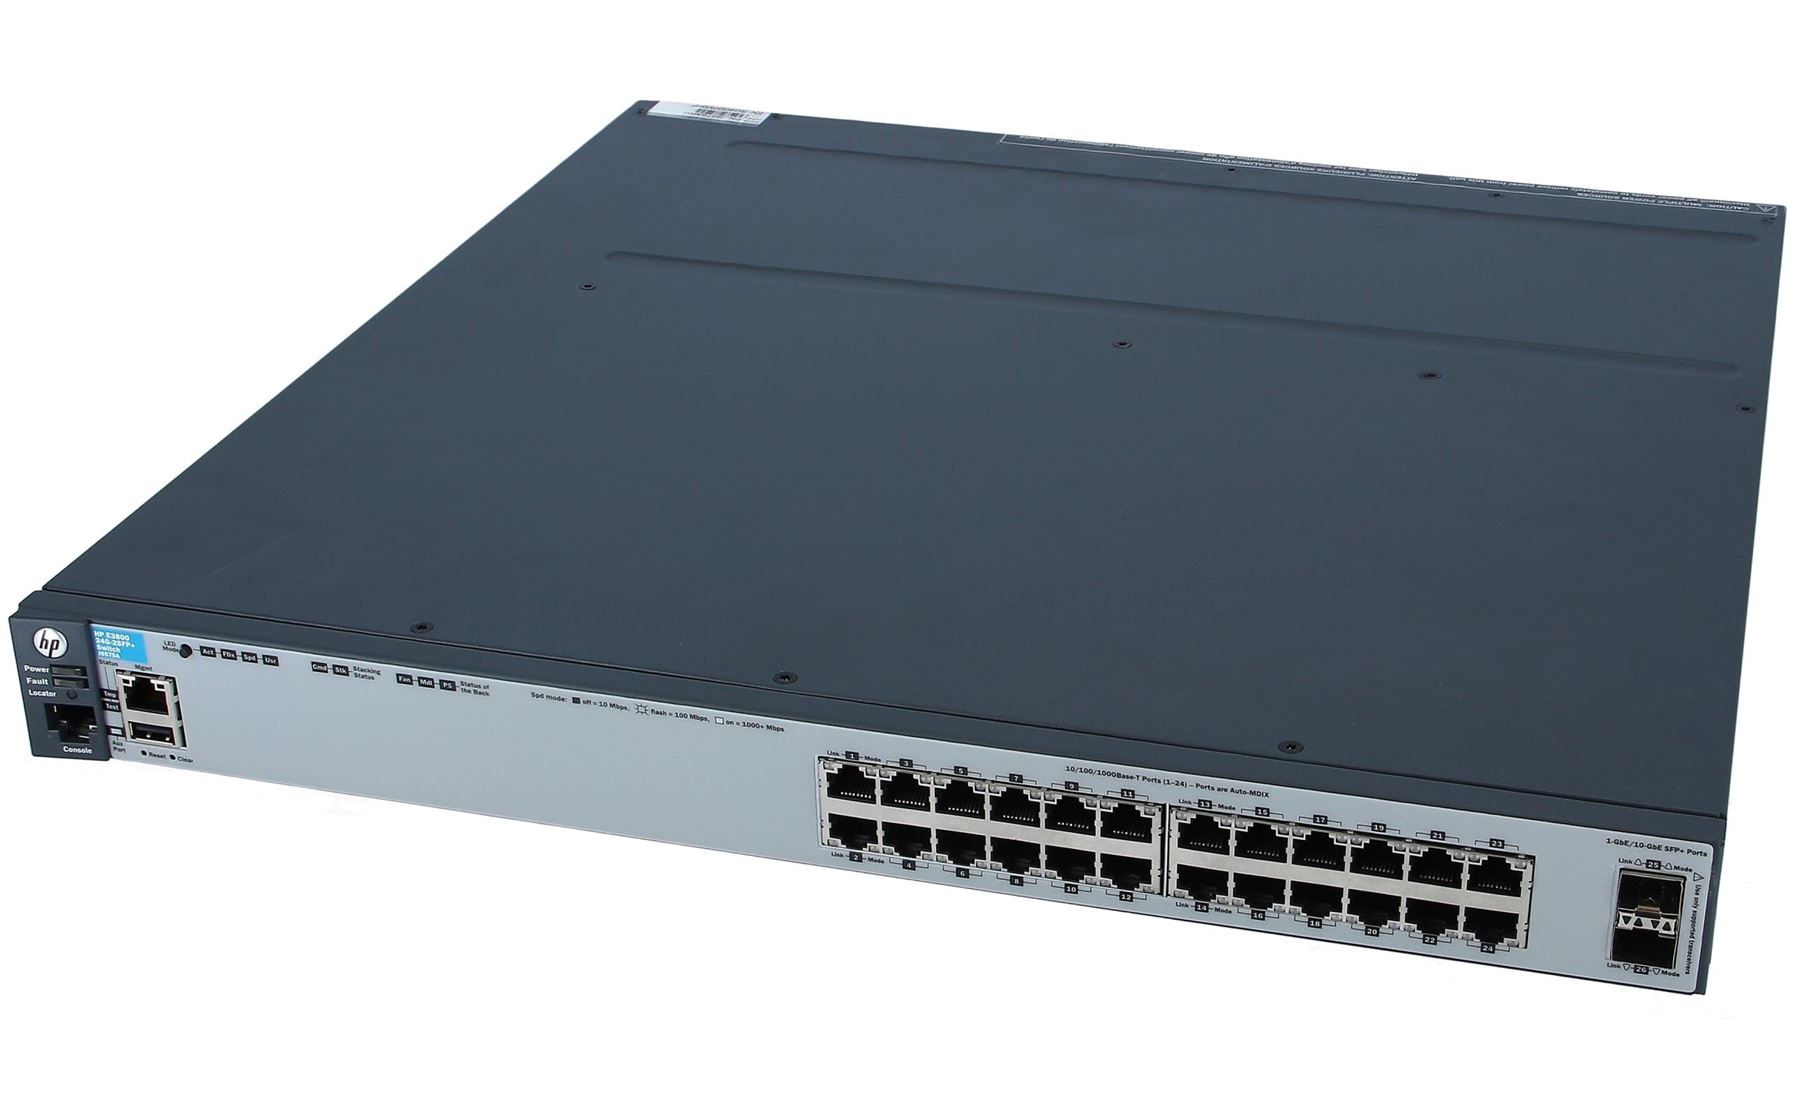 HP 3800-24G-2SFP+ Switch-L4-managed -24 x 10/100/1000 + 2 x 10 Gigabit Ethernet